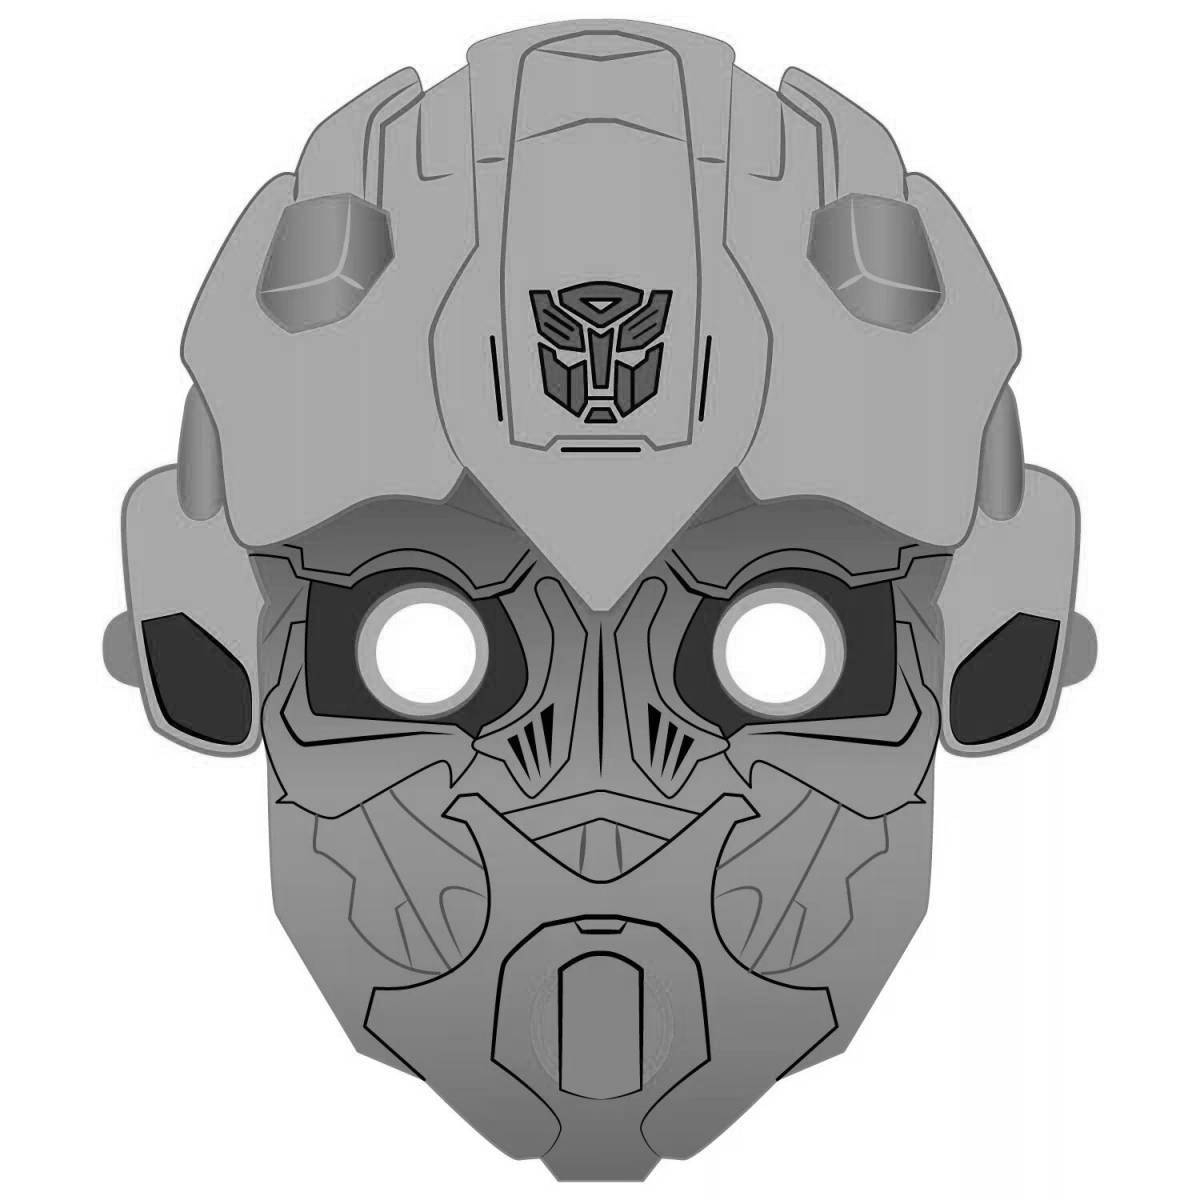 Creative coloring robot mask